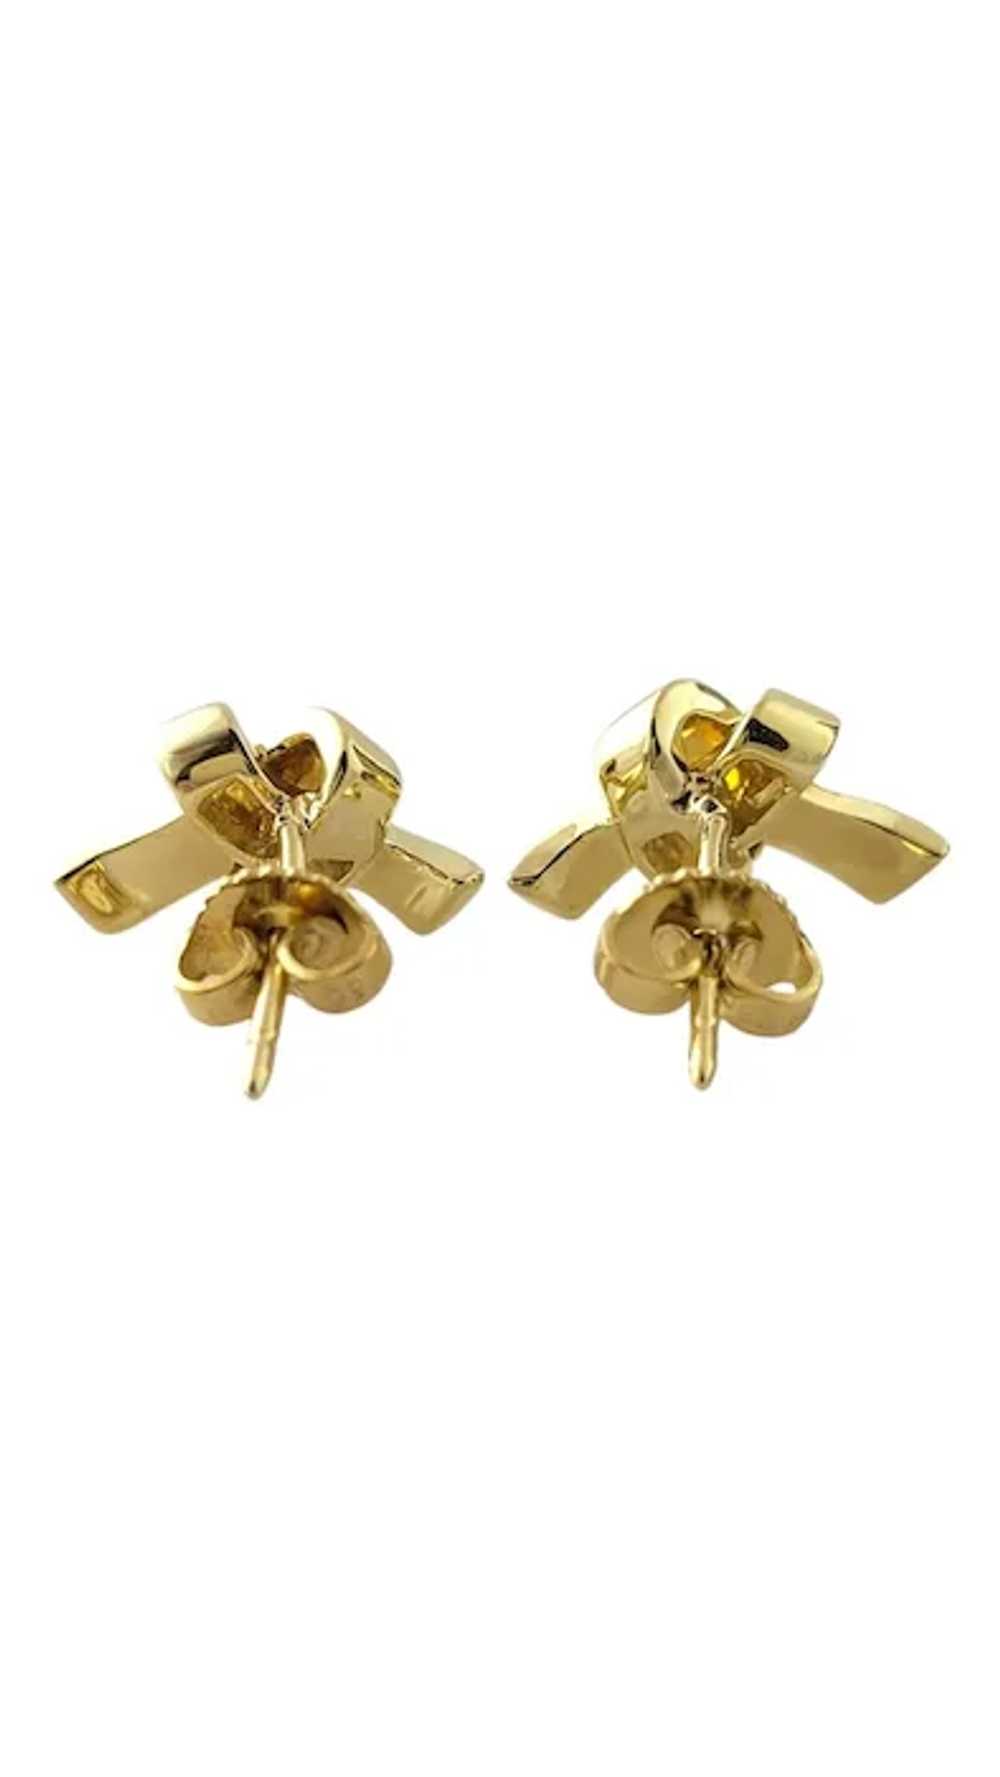 18K Yellow Gold Bow Stud Earrings #16874 - image 4